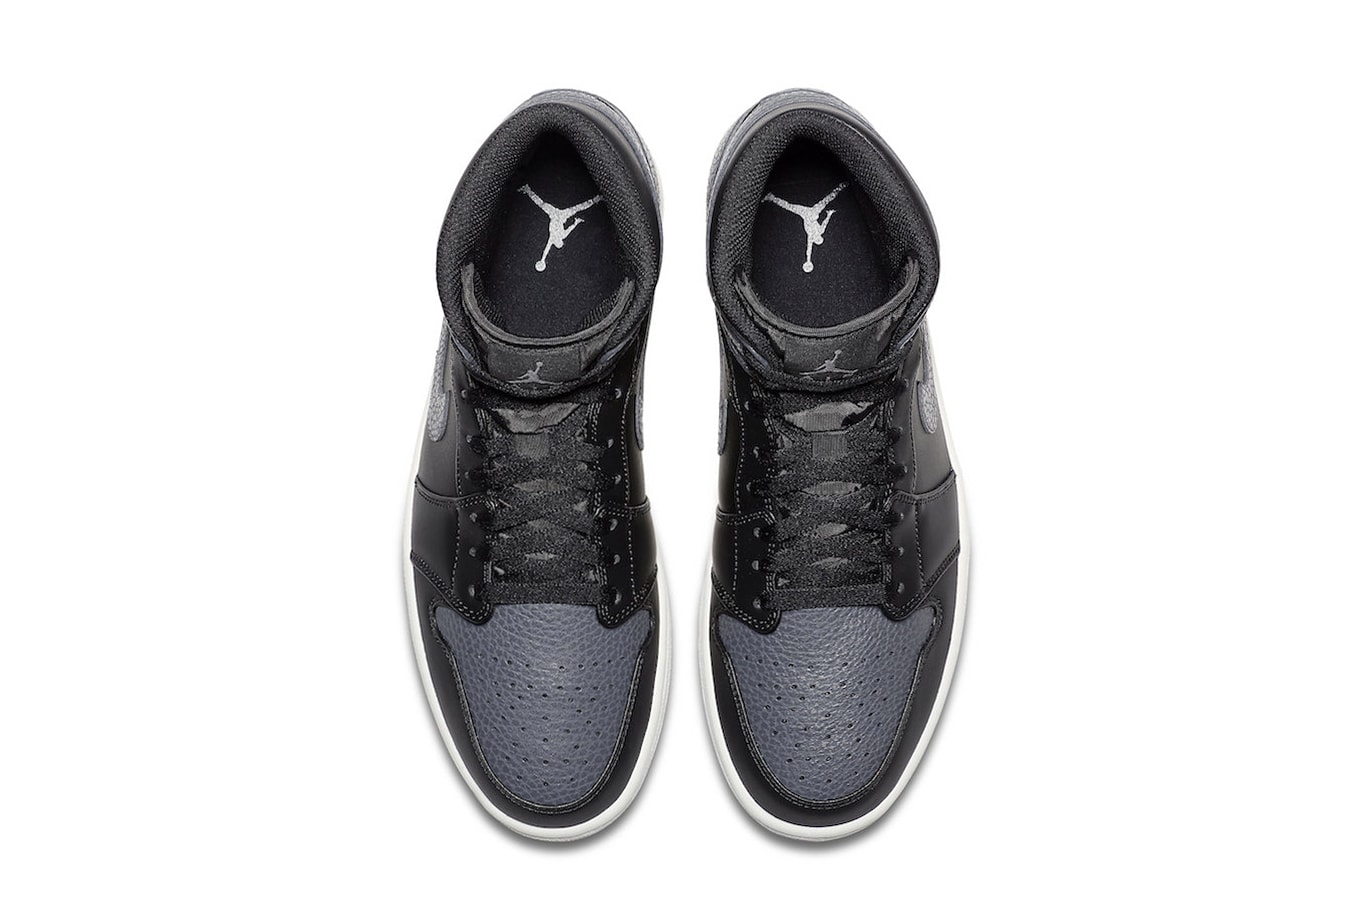 Air Jordan 1 Mid Dark Grey black tumbled Leather colorway release date